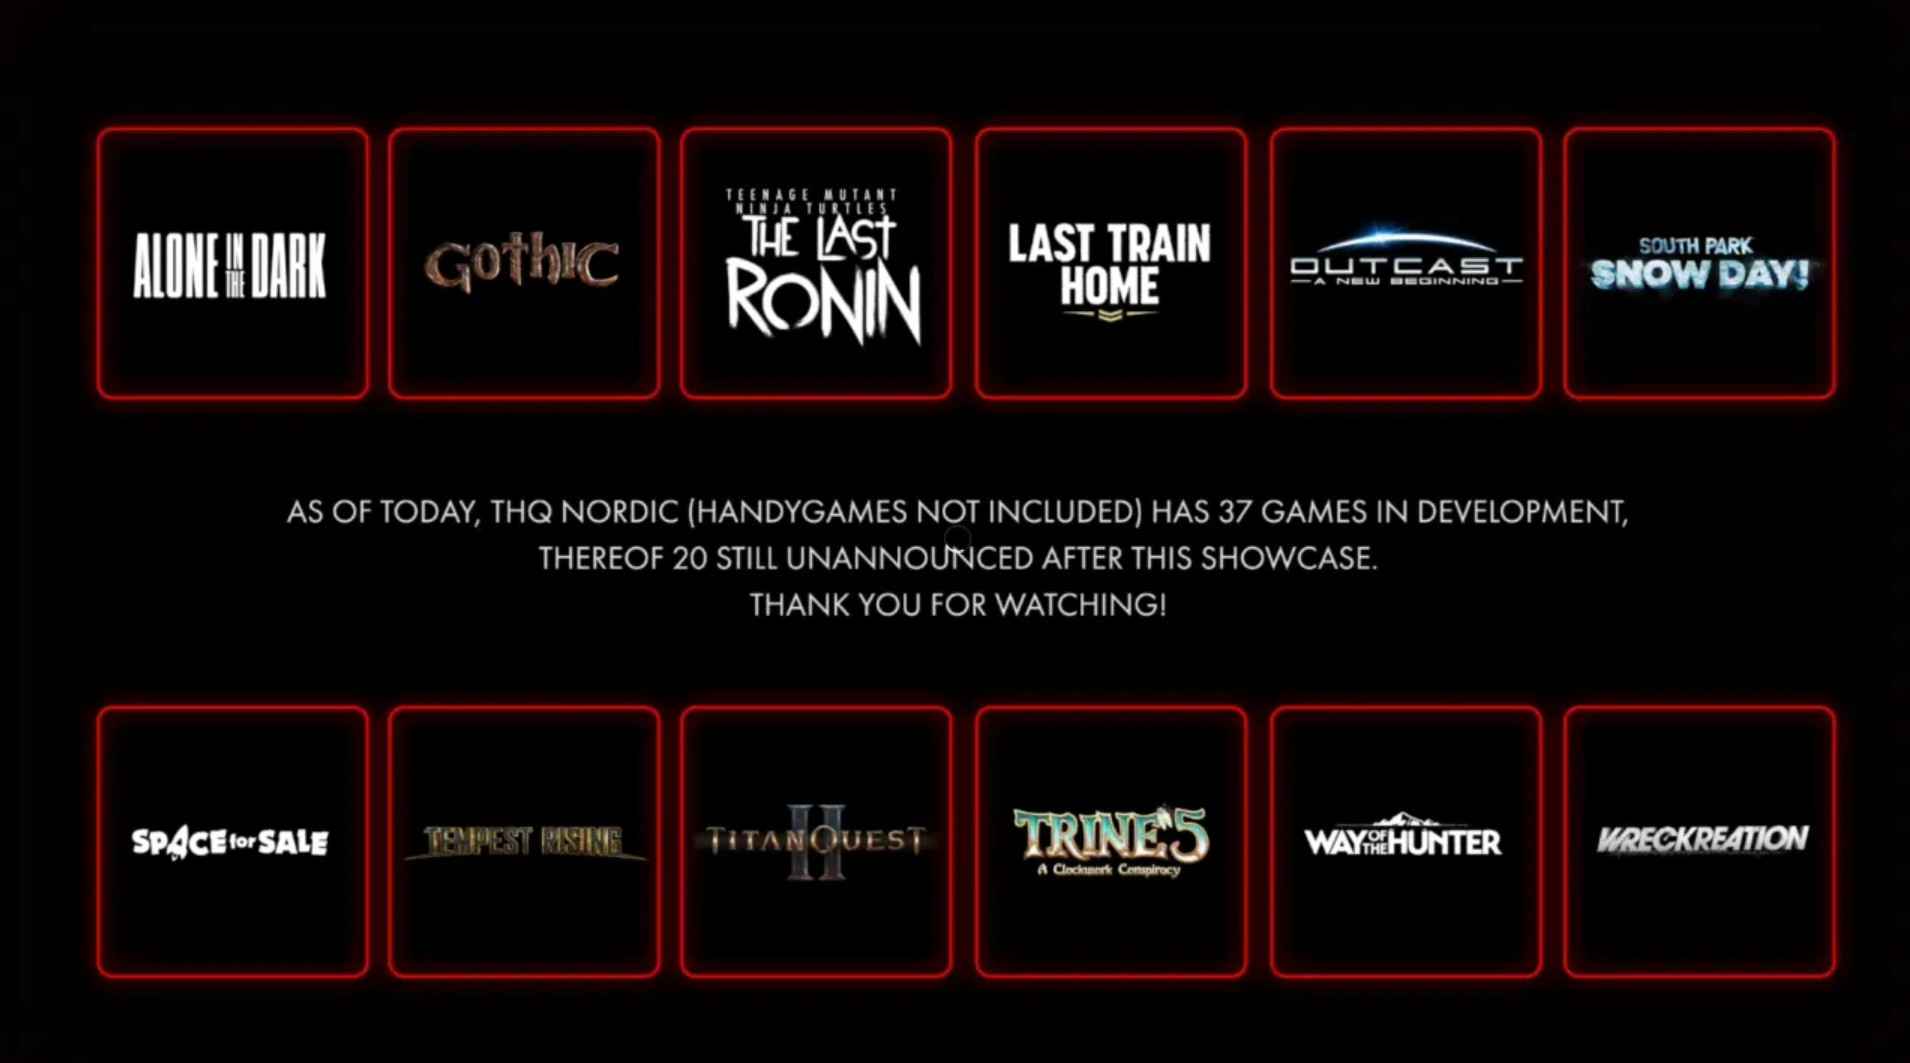 THQ Nordic表示還有20個未公布的游戲在開發